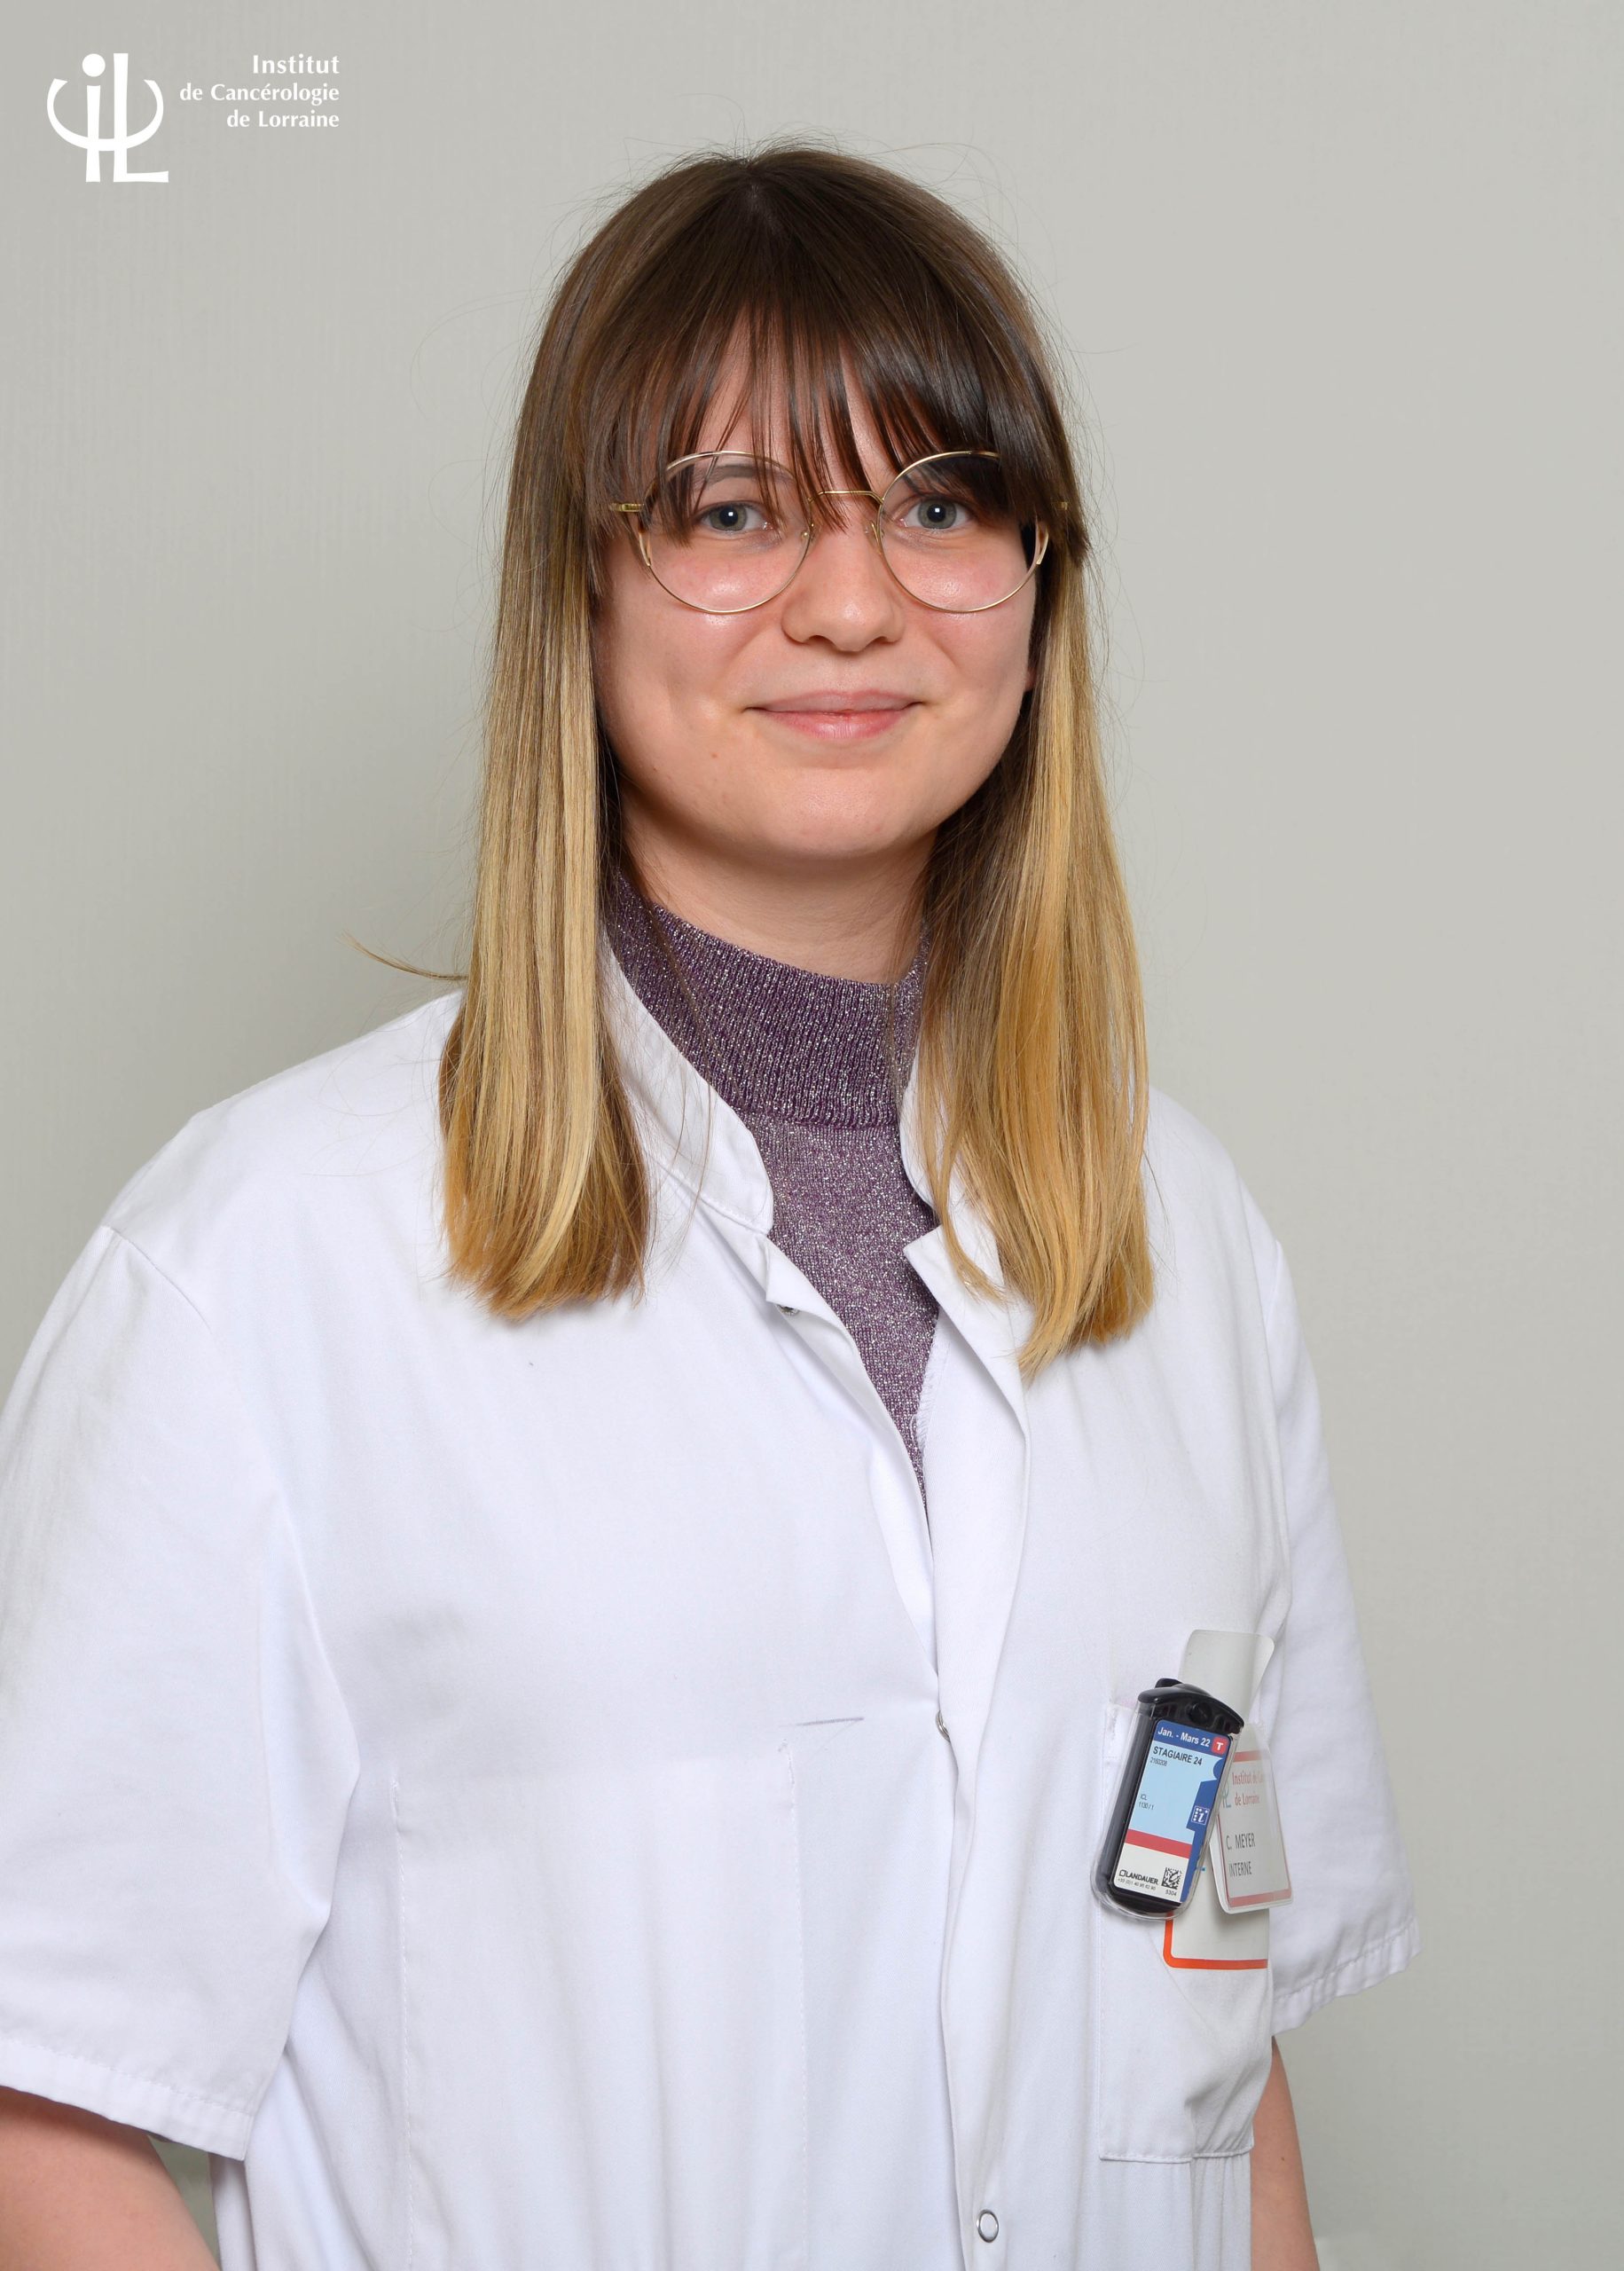 Dr MEYER Céline